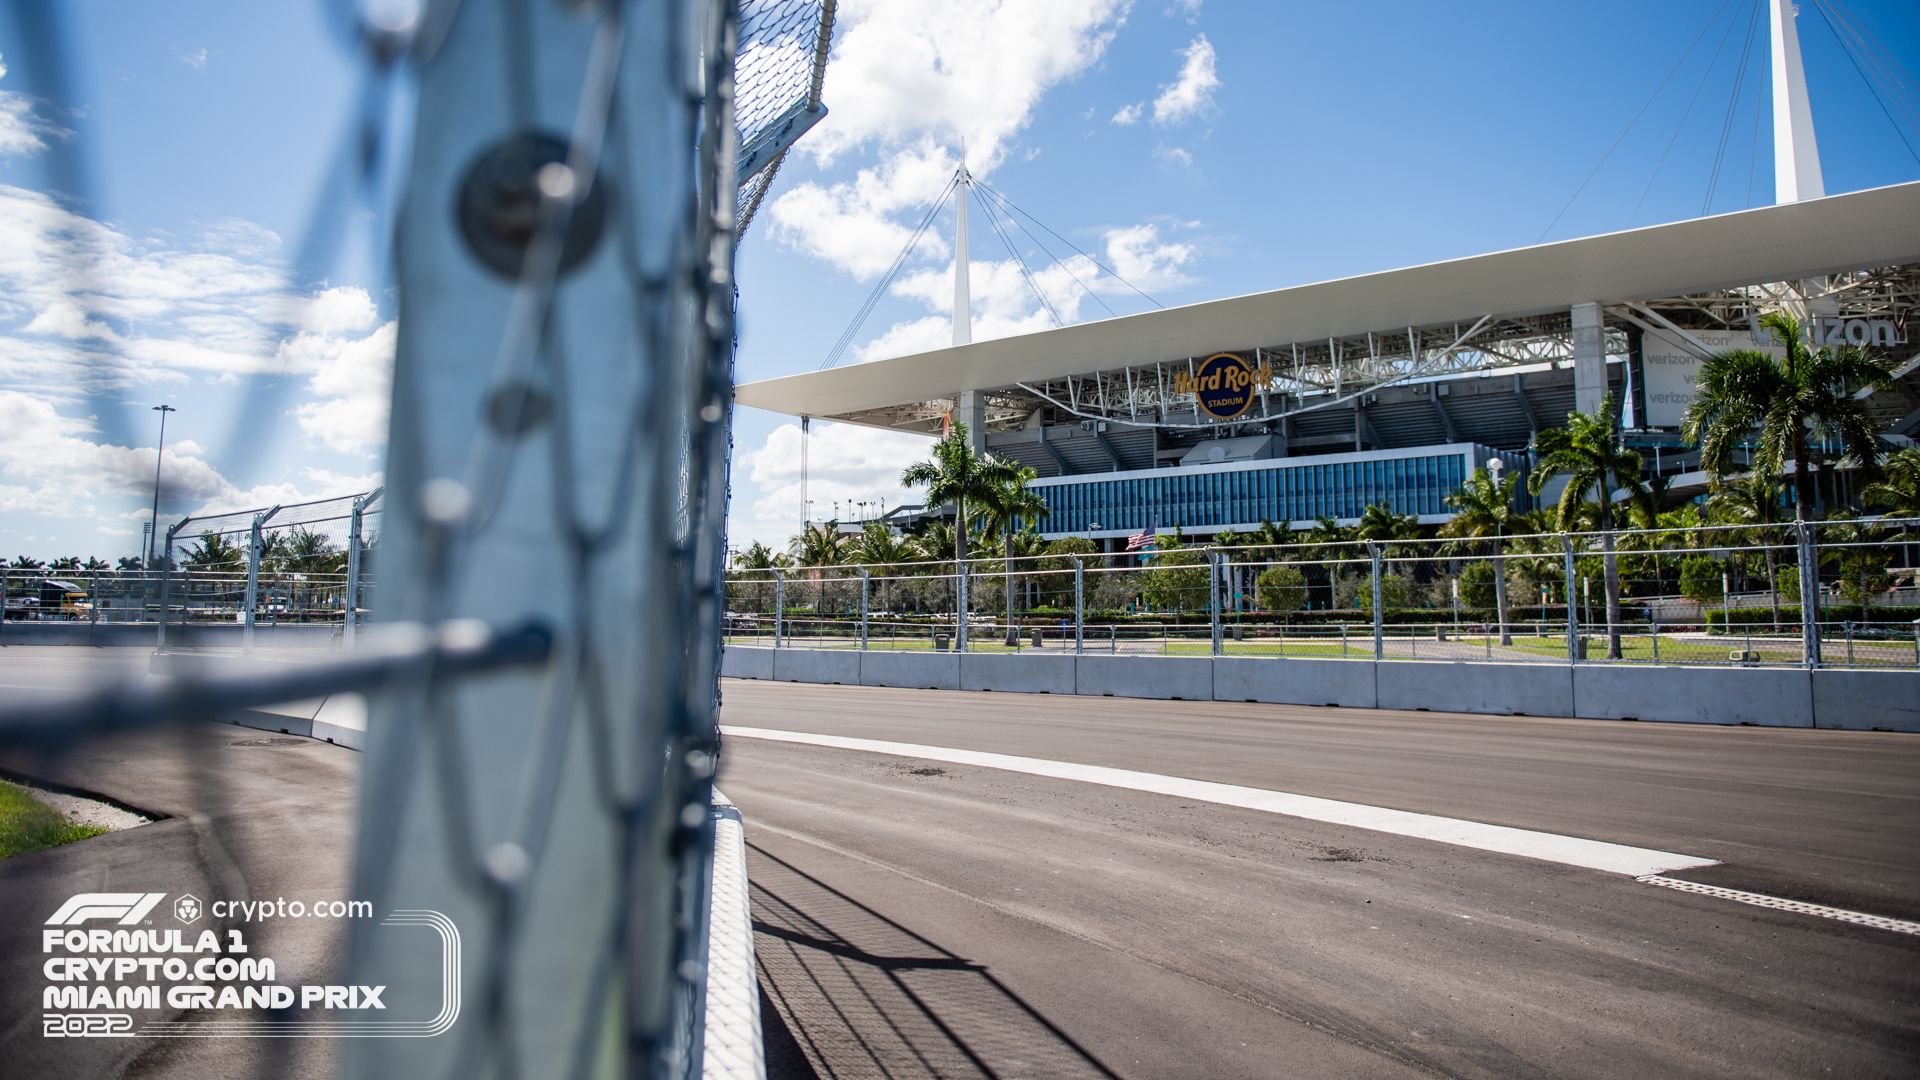 Latest Images, Video: F1 Miami Grand Prix Circuit '95% Complete